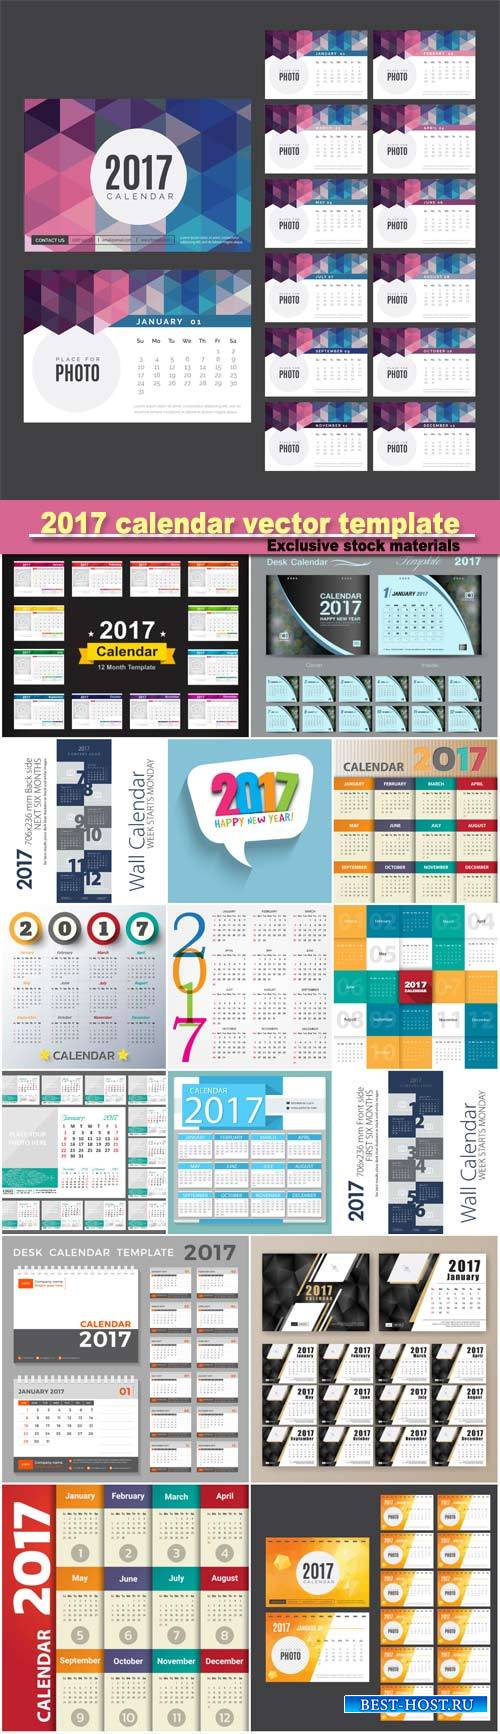 2017 calendar vector template